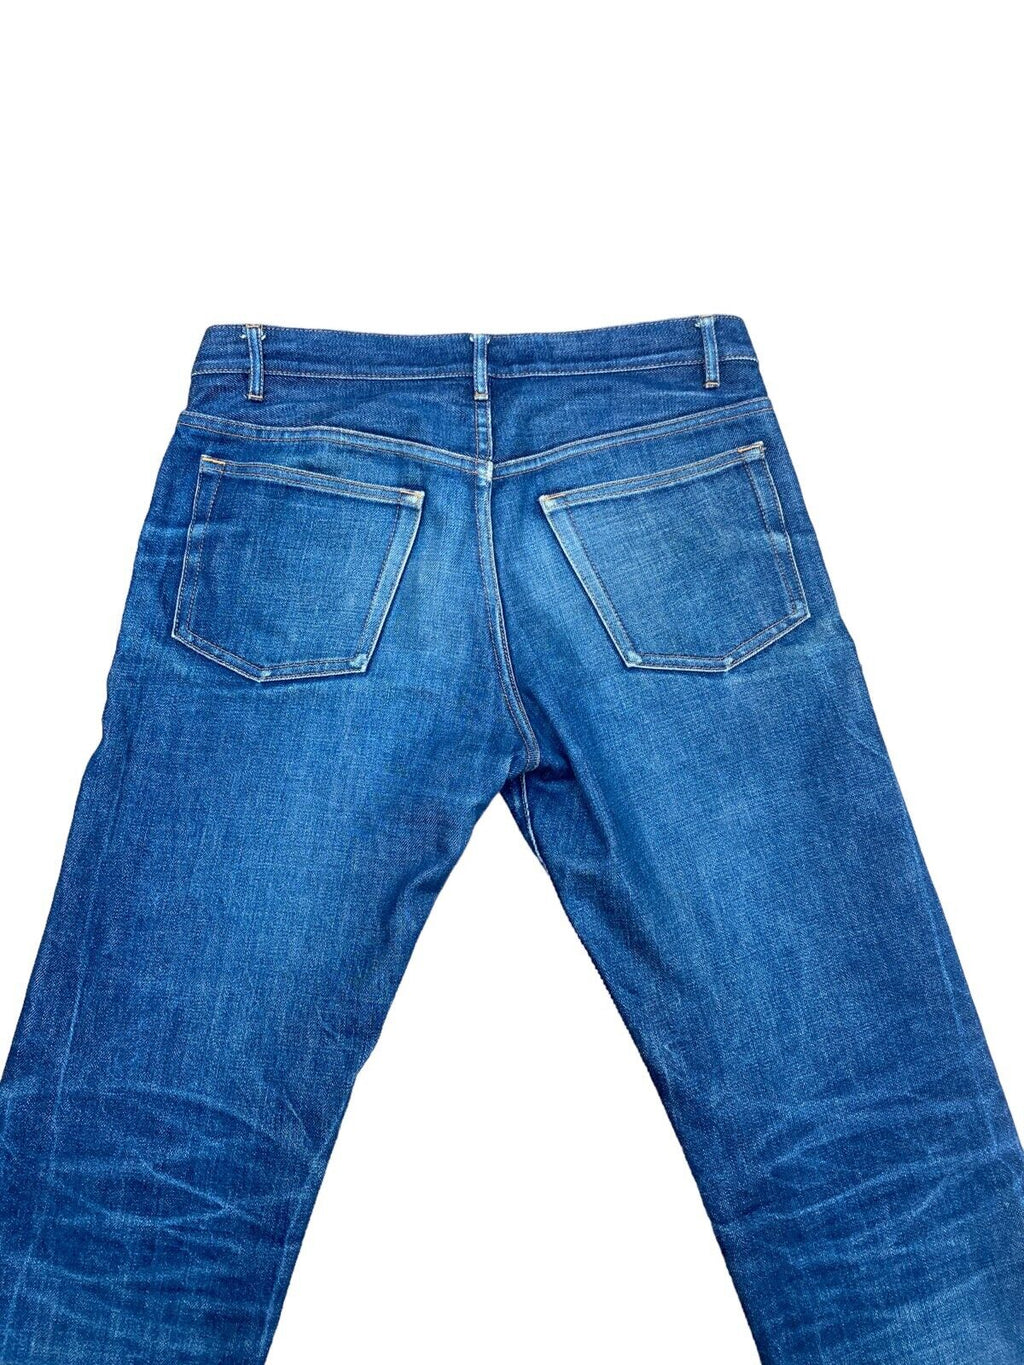 Butler Denim jeans  New Standard